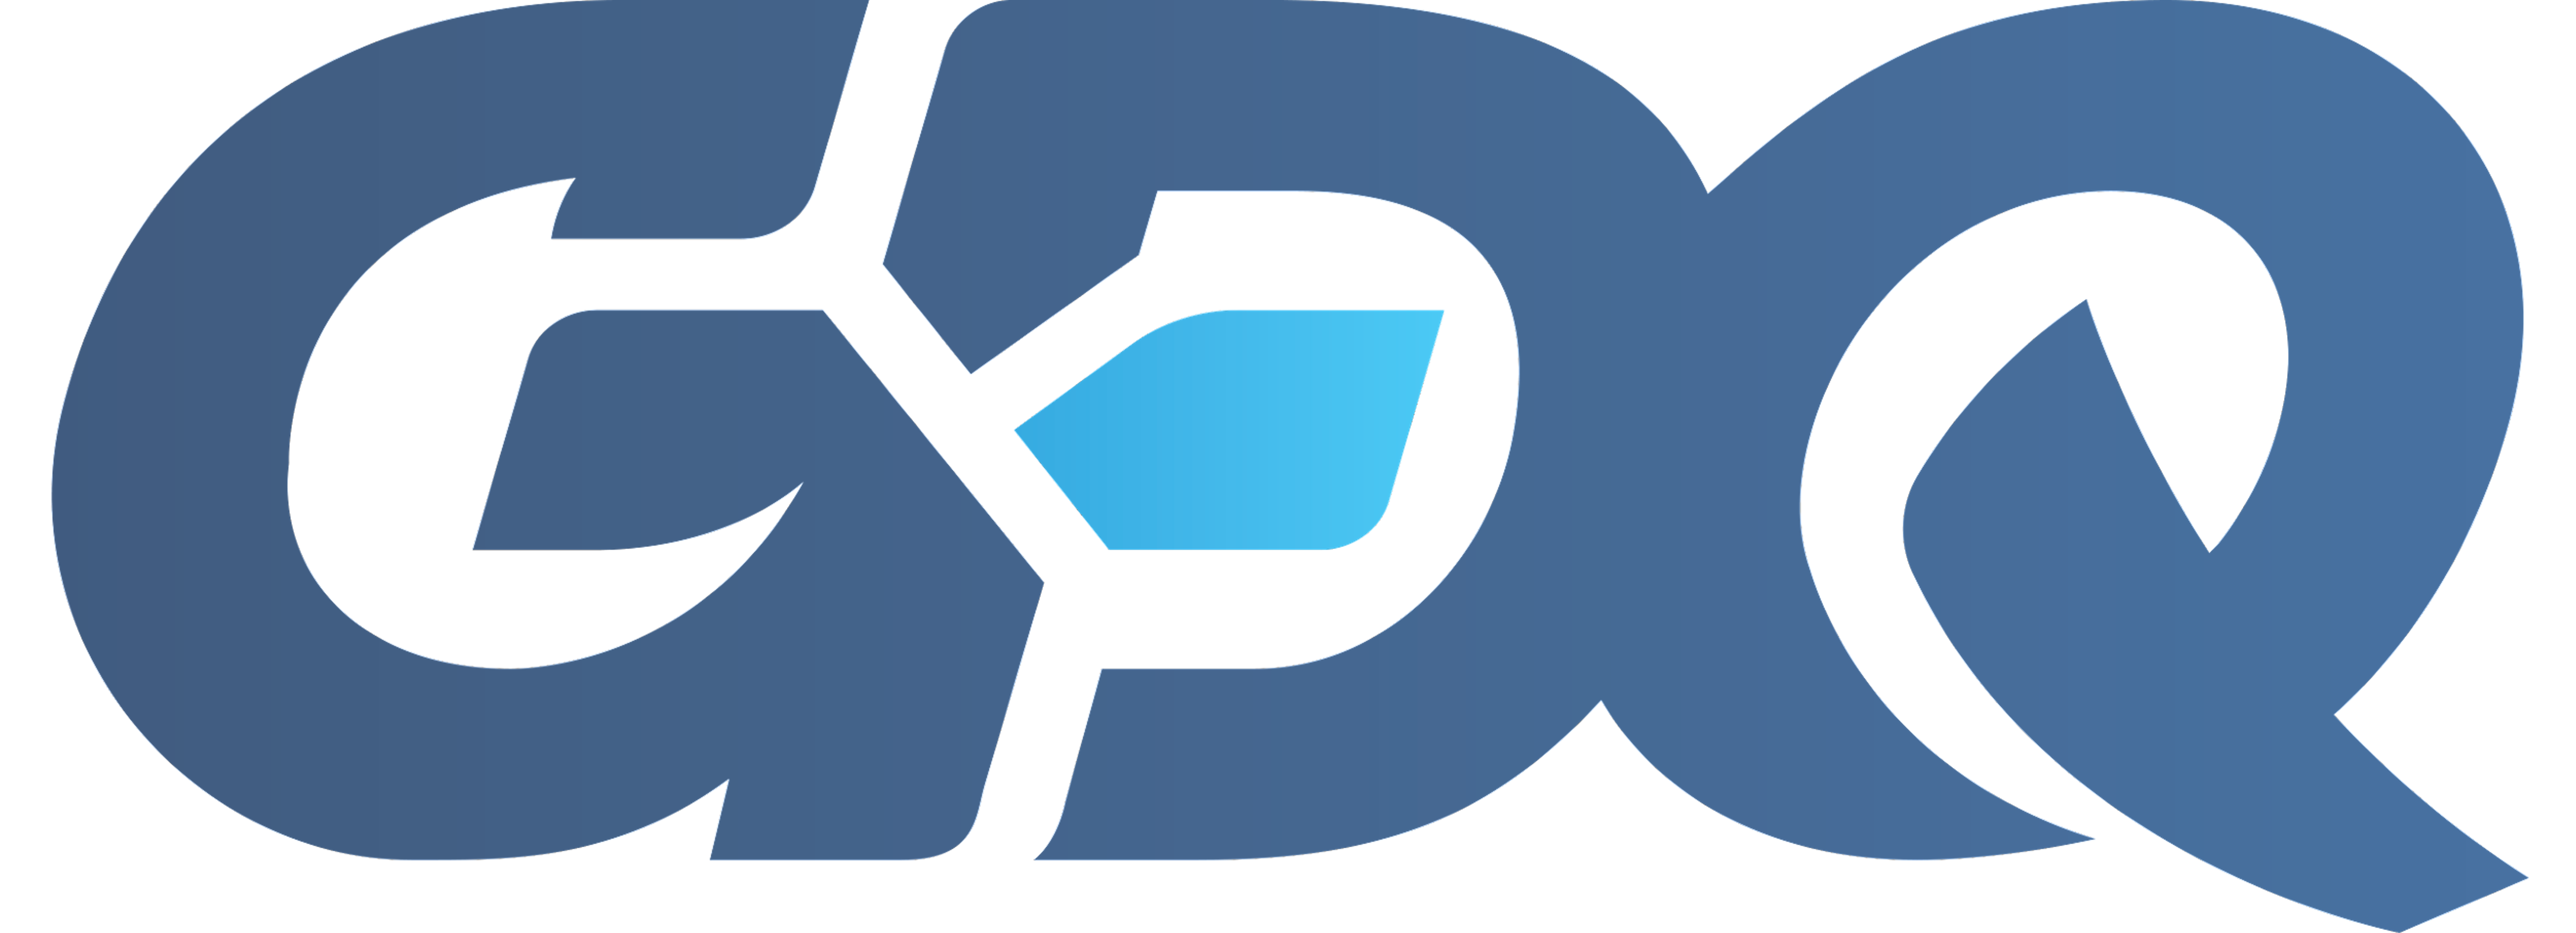 The GamesDoneQuick logo